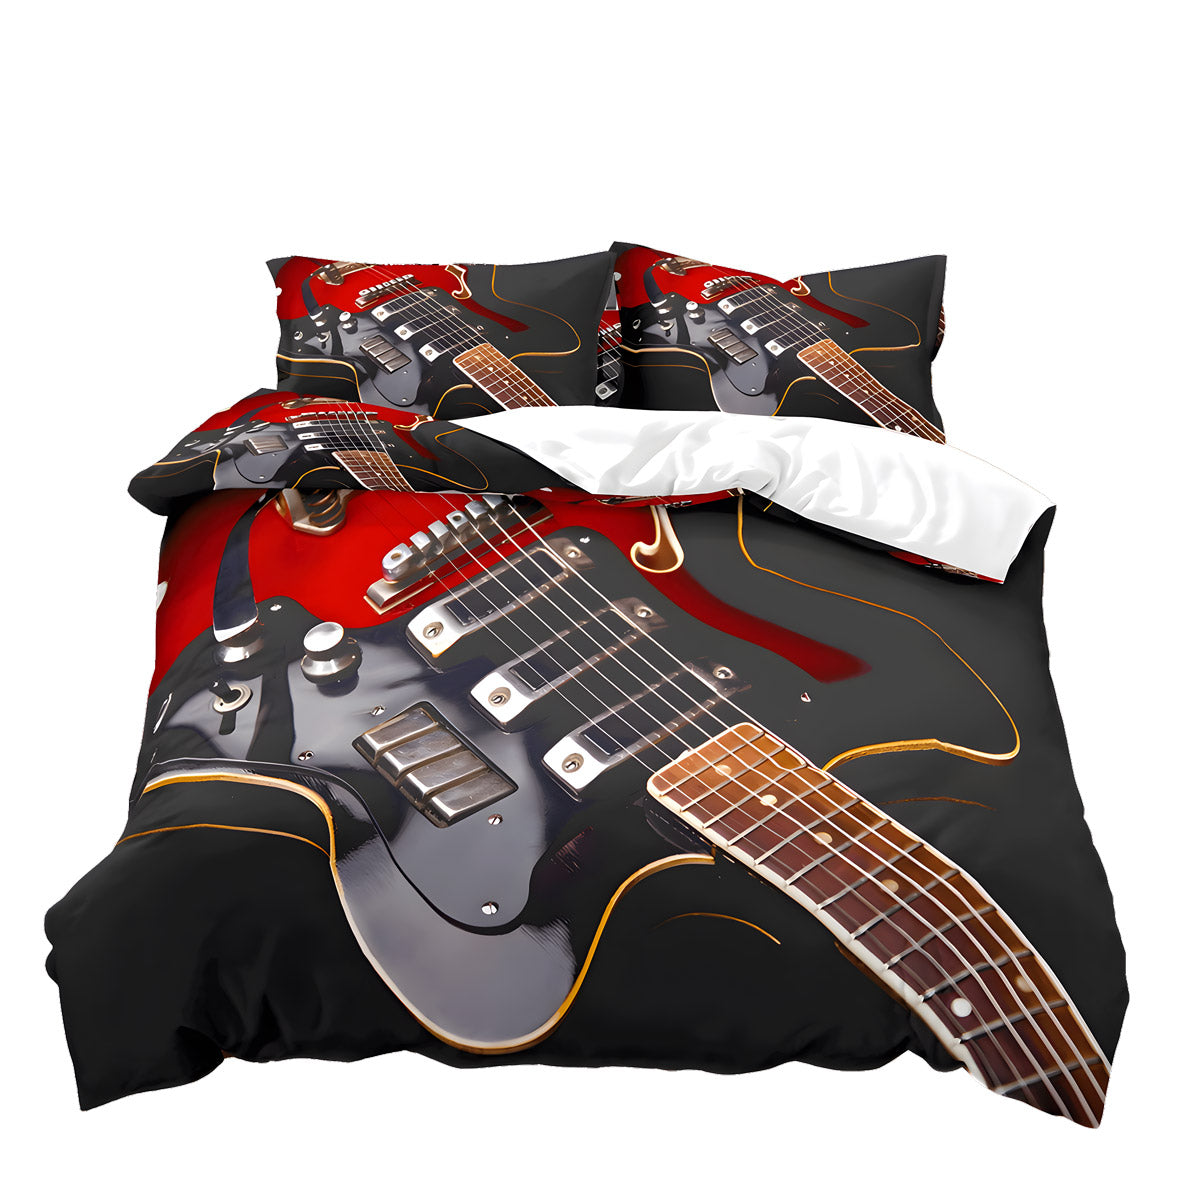 Guitar Bedding Set: Duvet Cover + 2 Pillow Cases